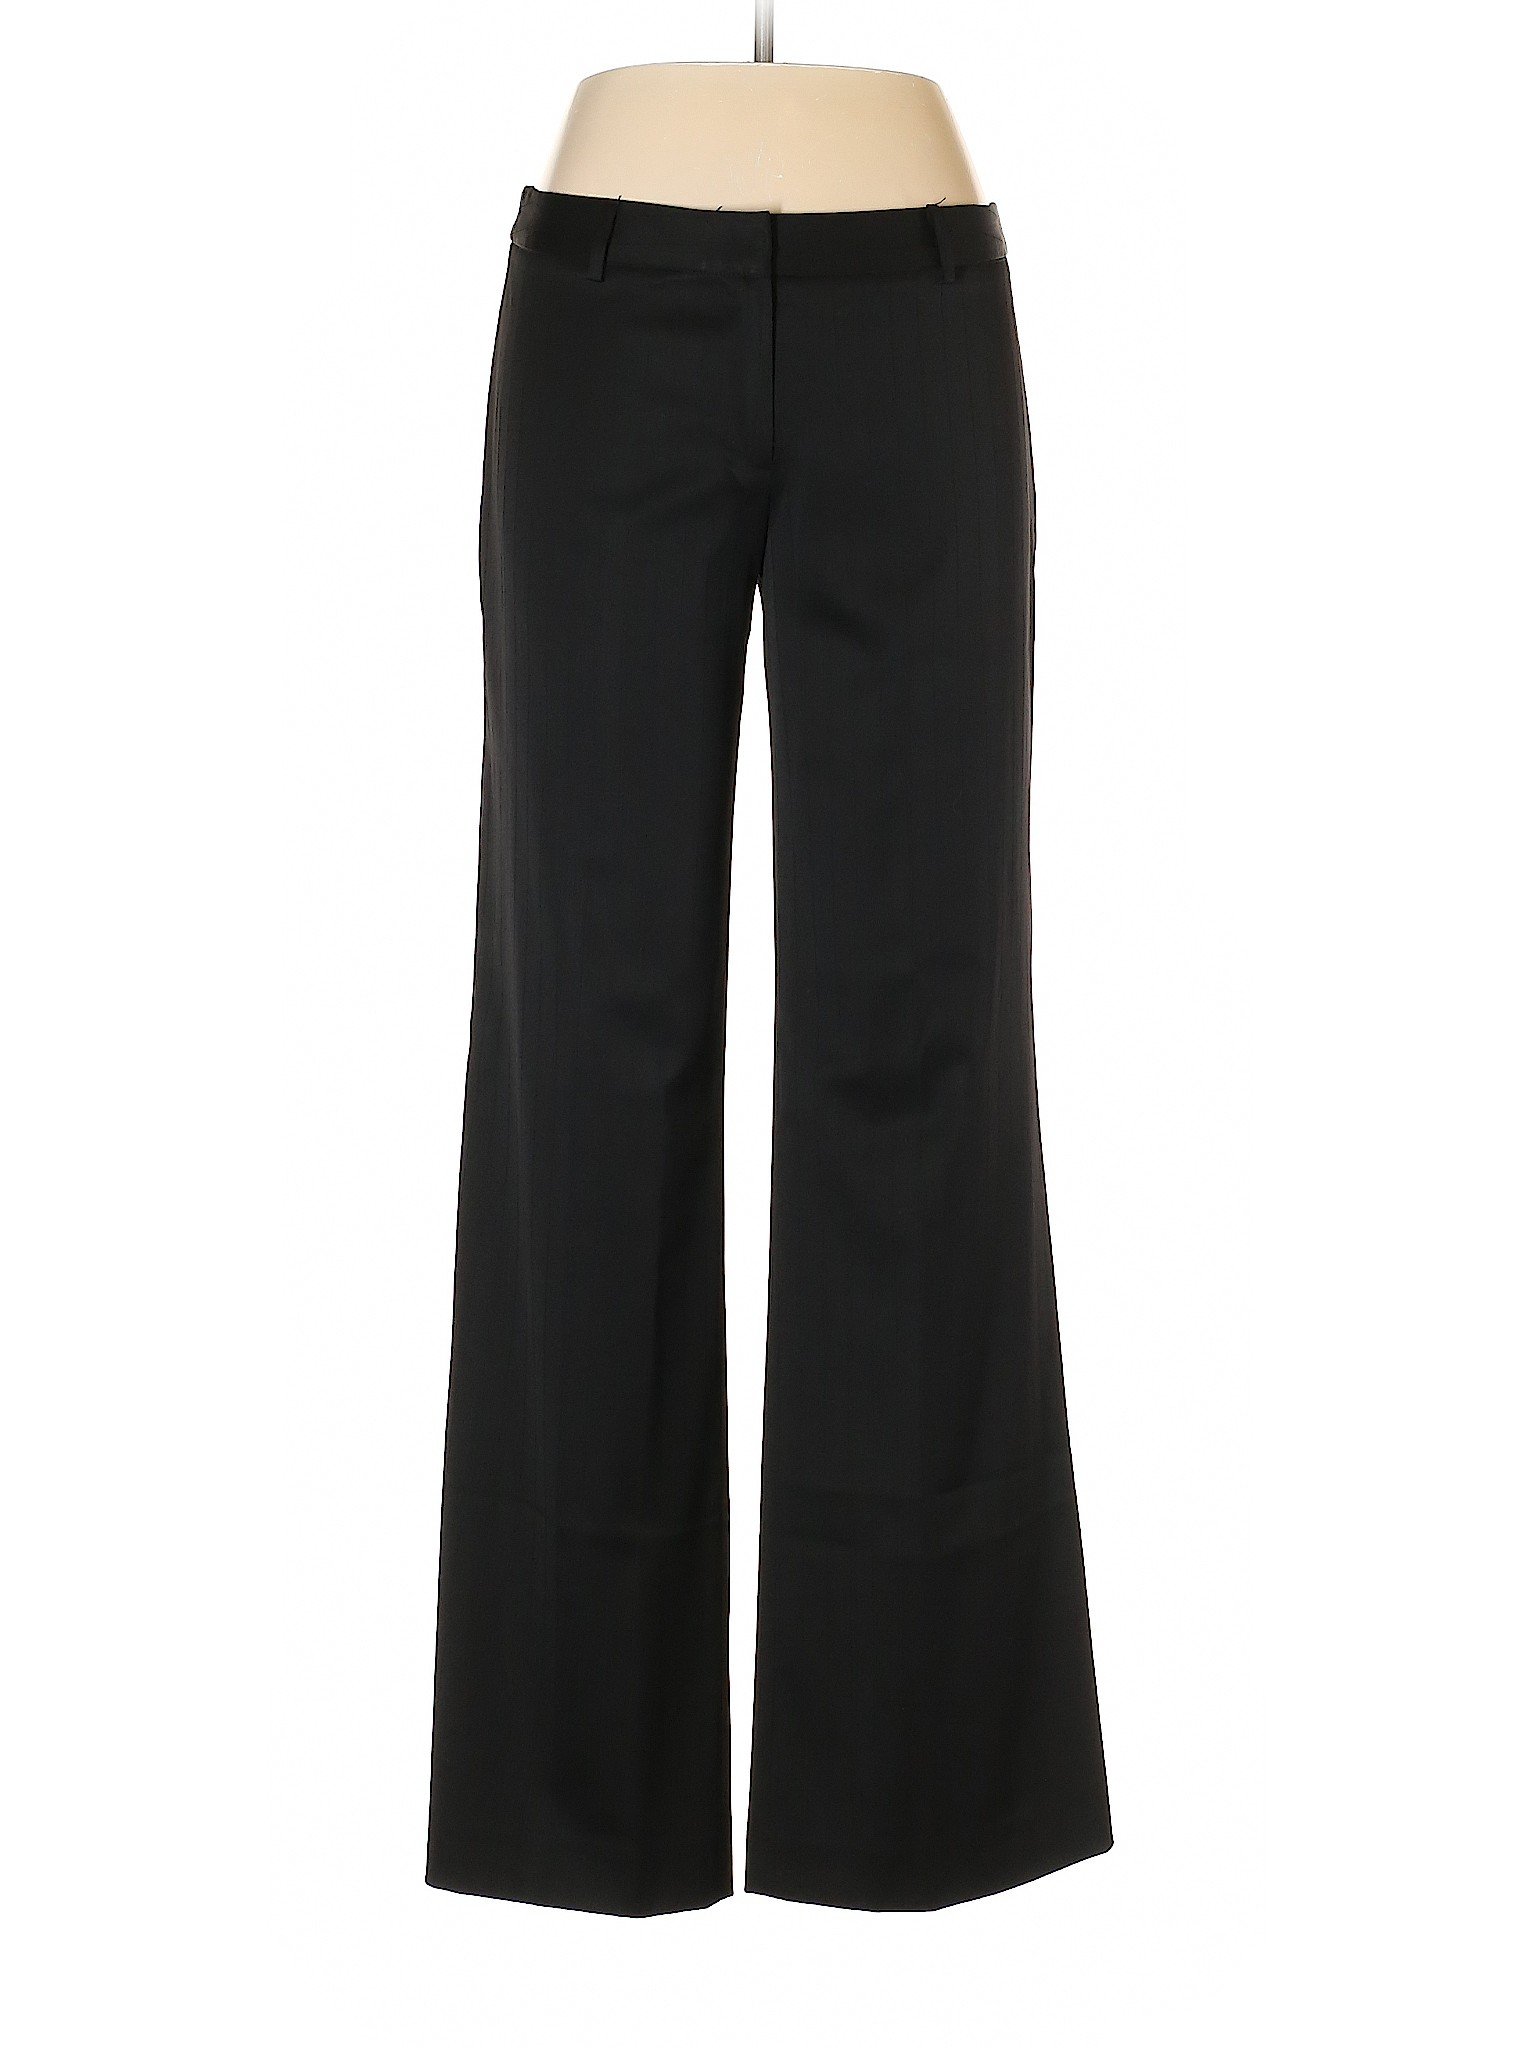 Milly Women Black Dress Pants 10 | eBay